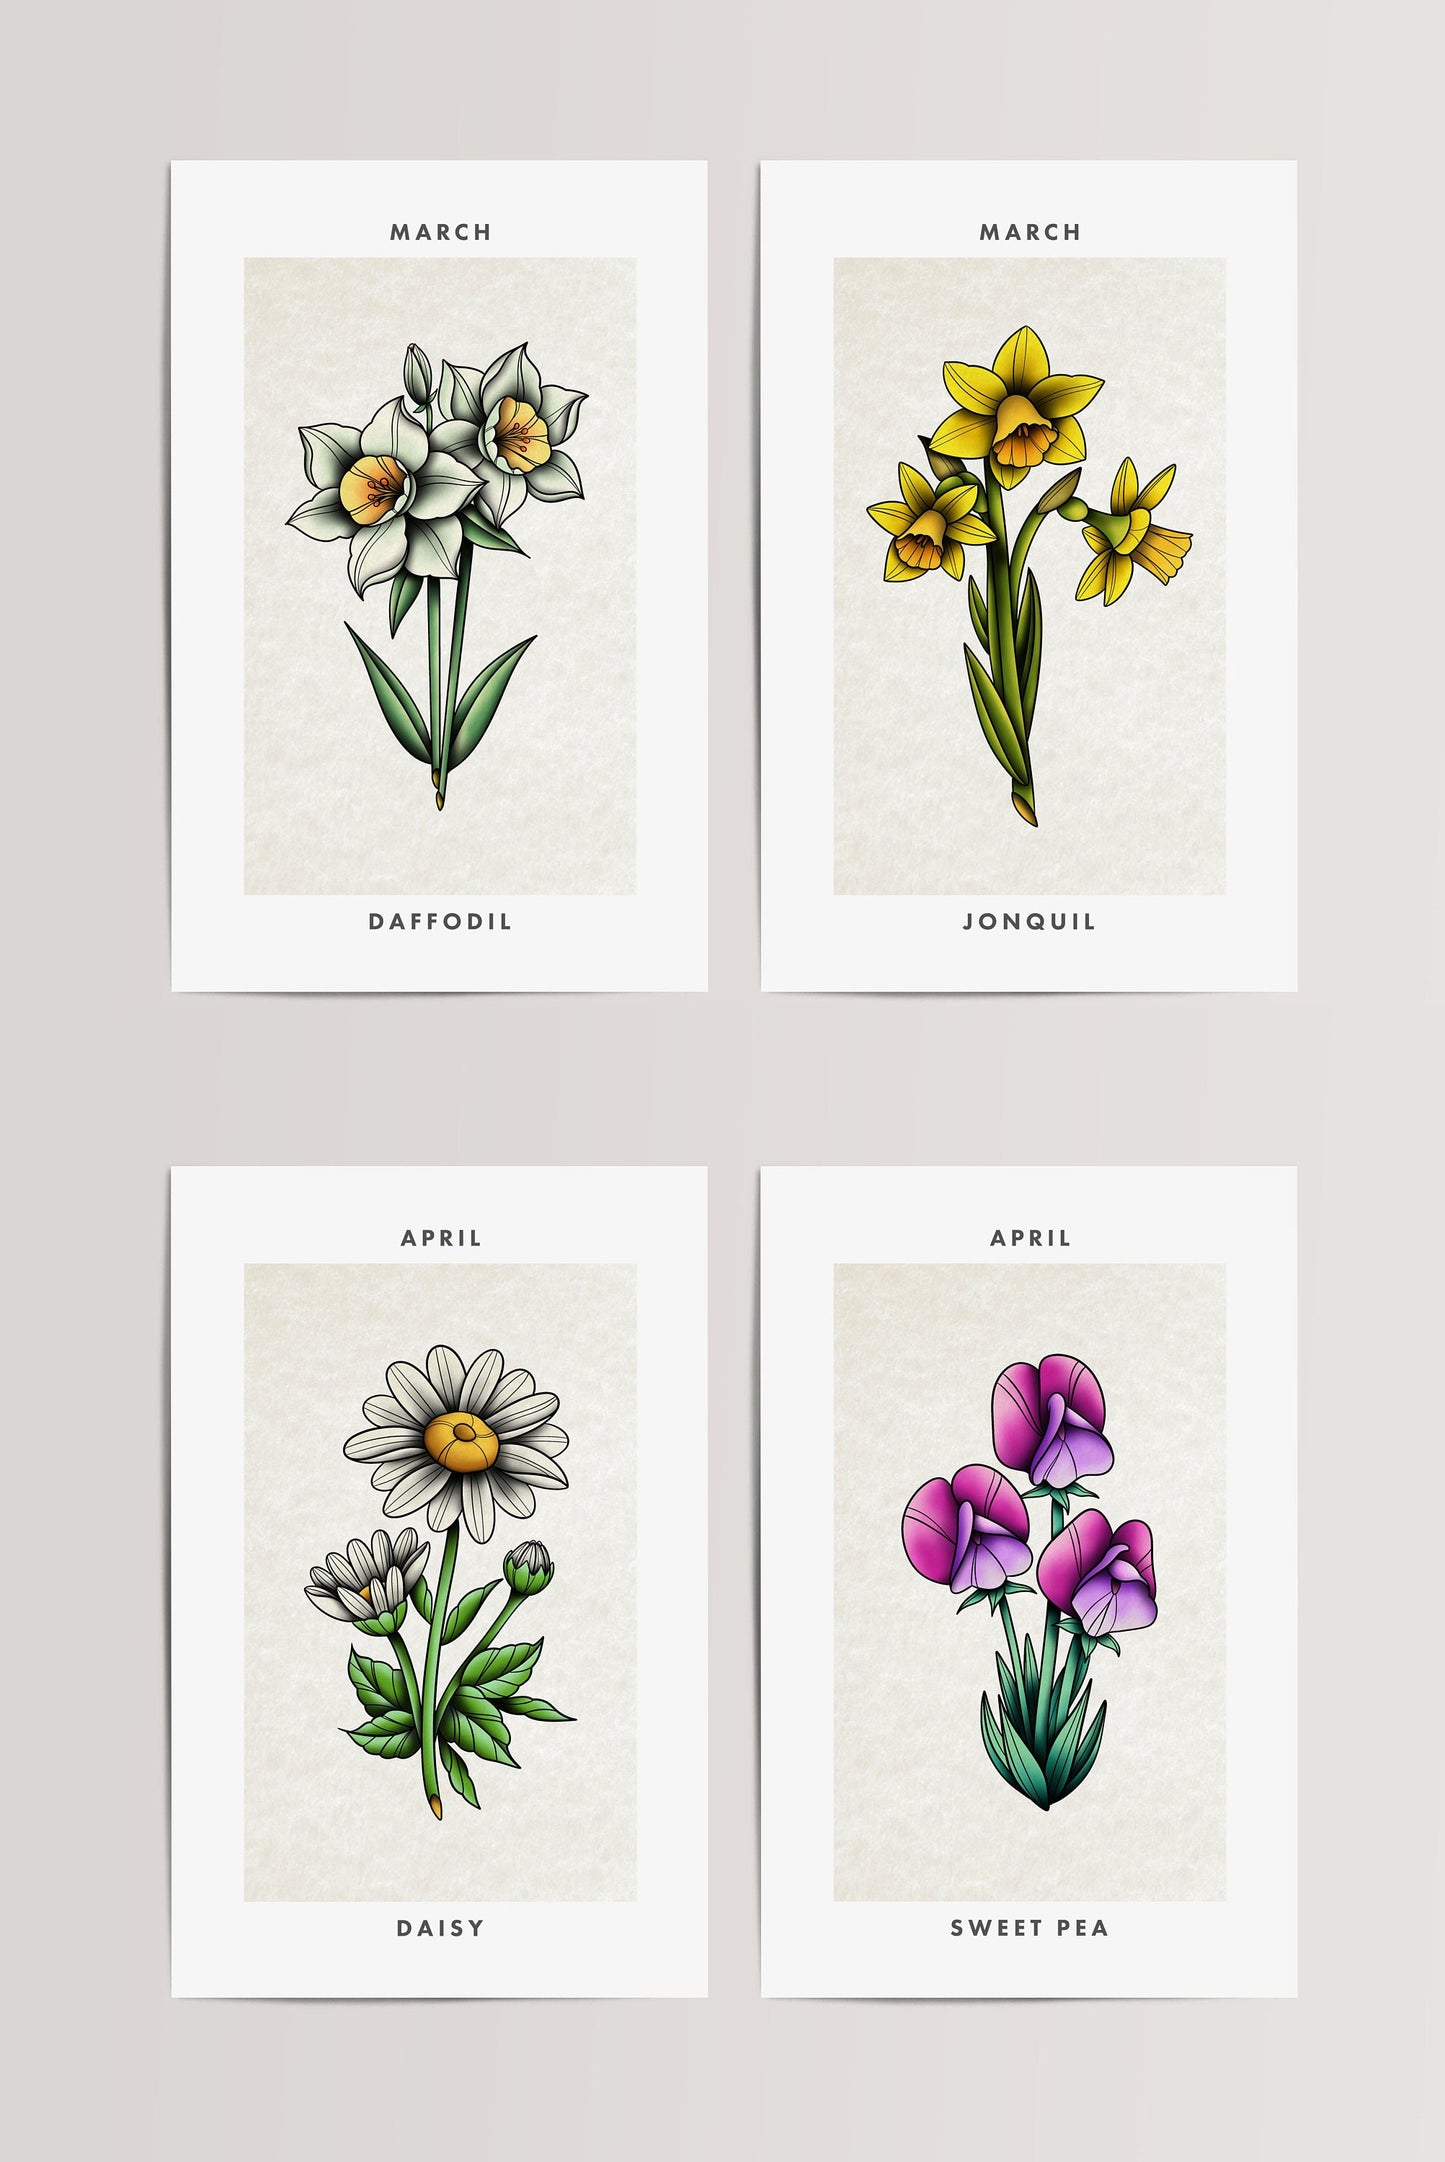 Mothers Day Gift - Tattoo Flower Art - Birth Month Flower Print - Vintage Flower Illustration Art